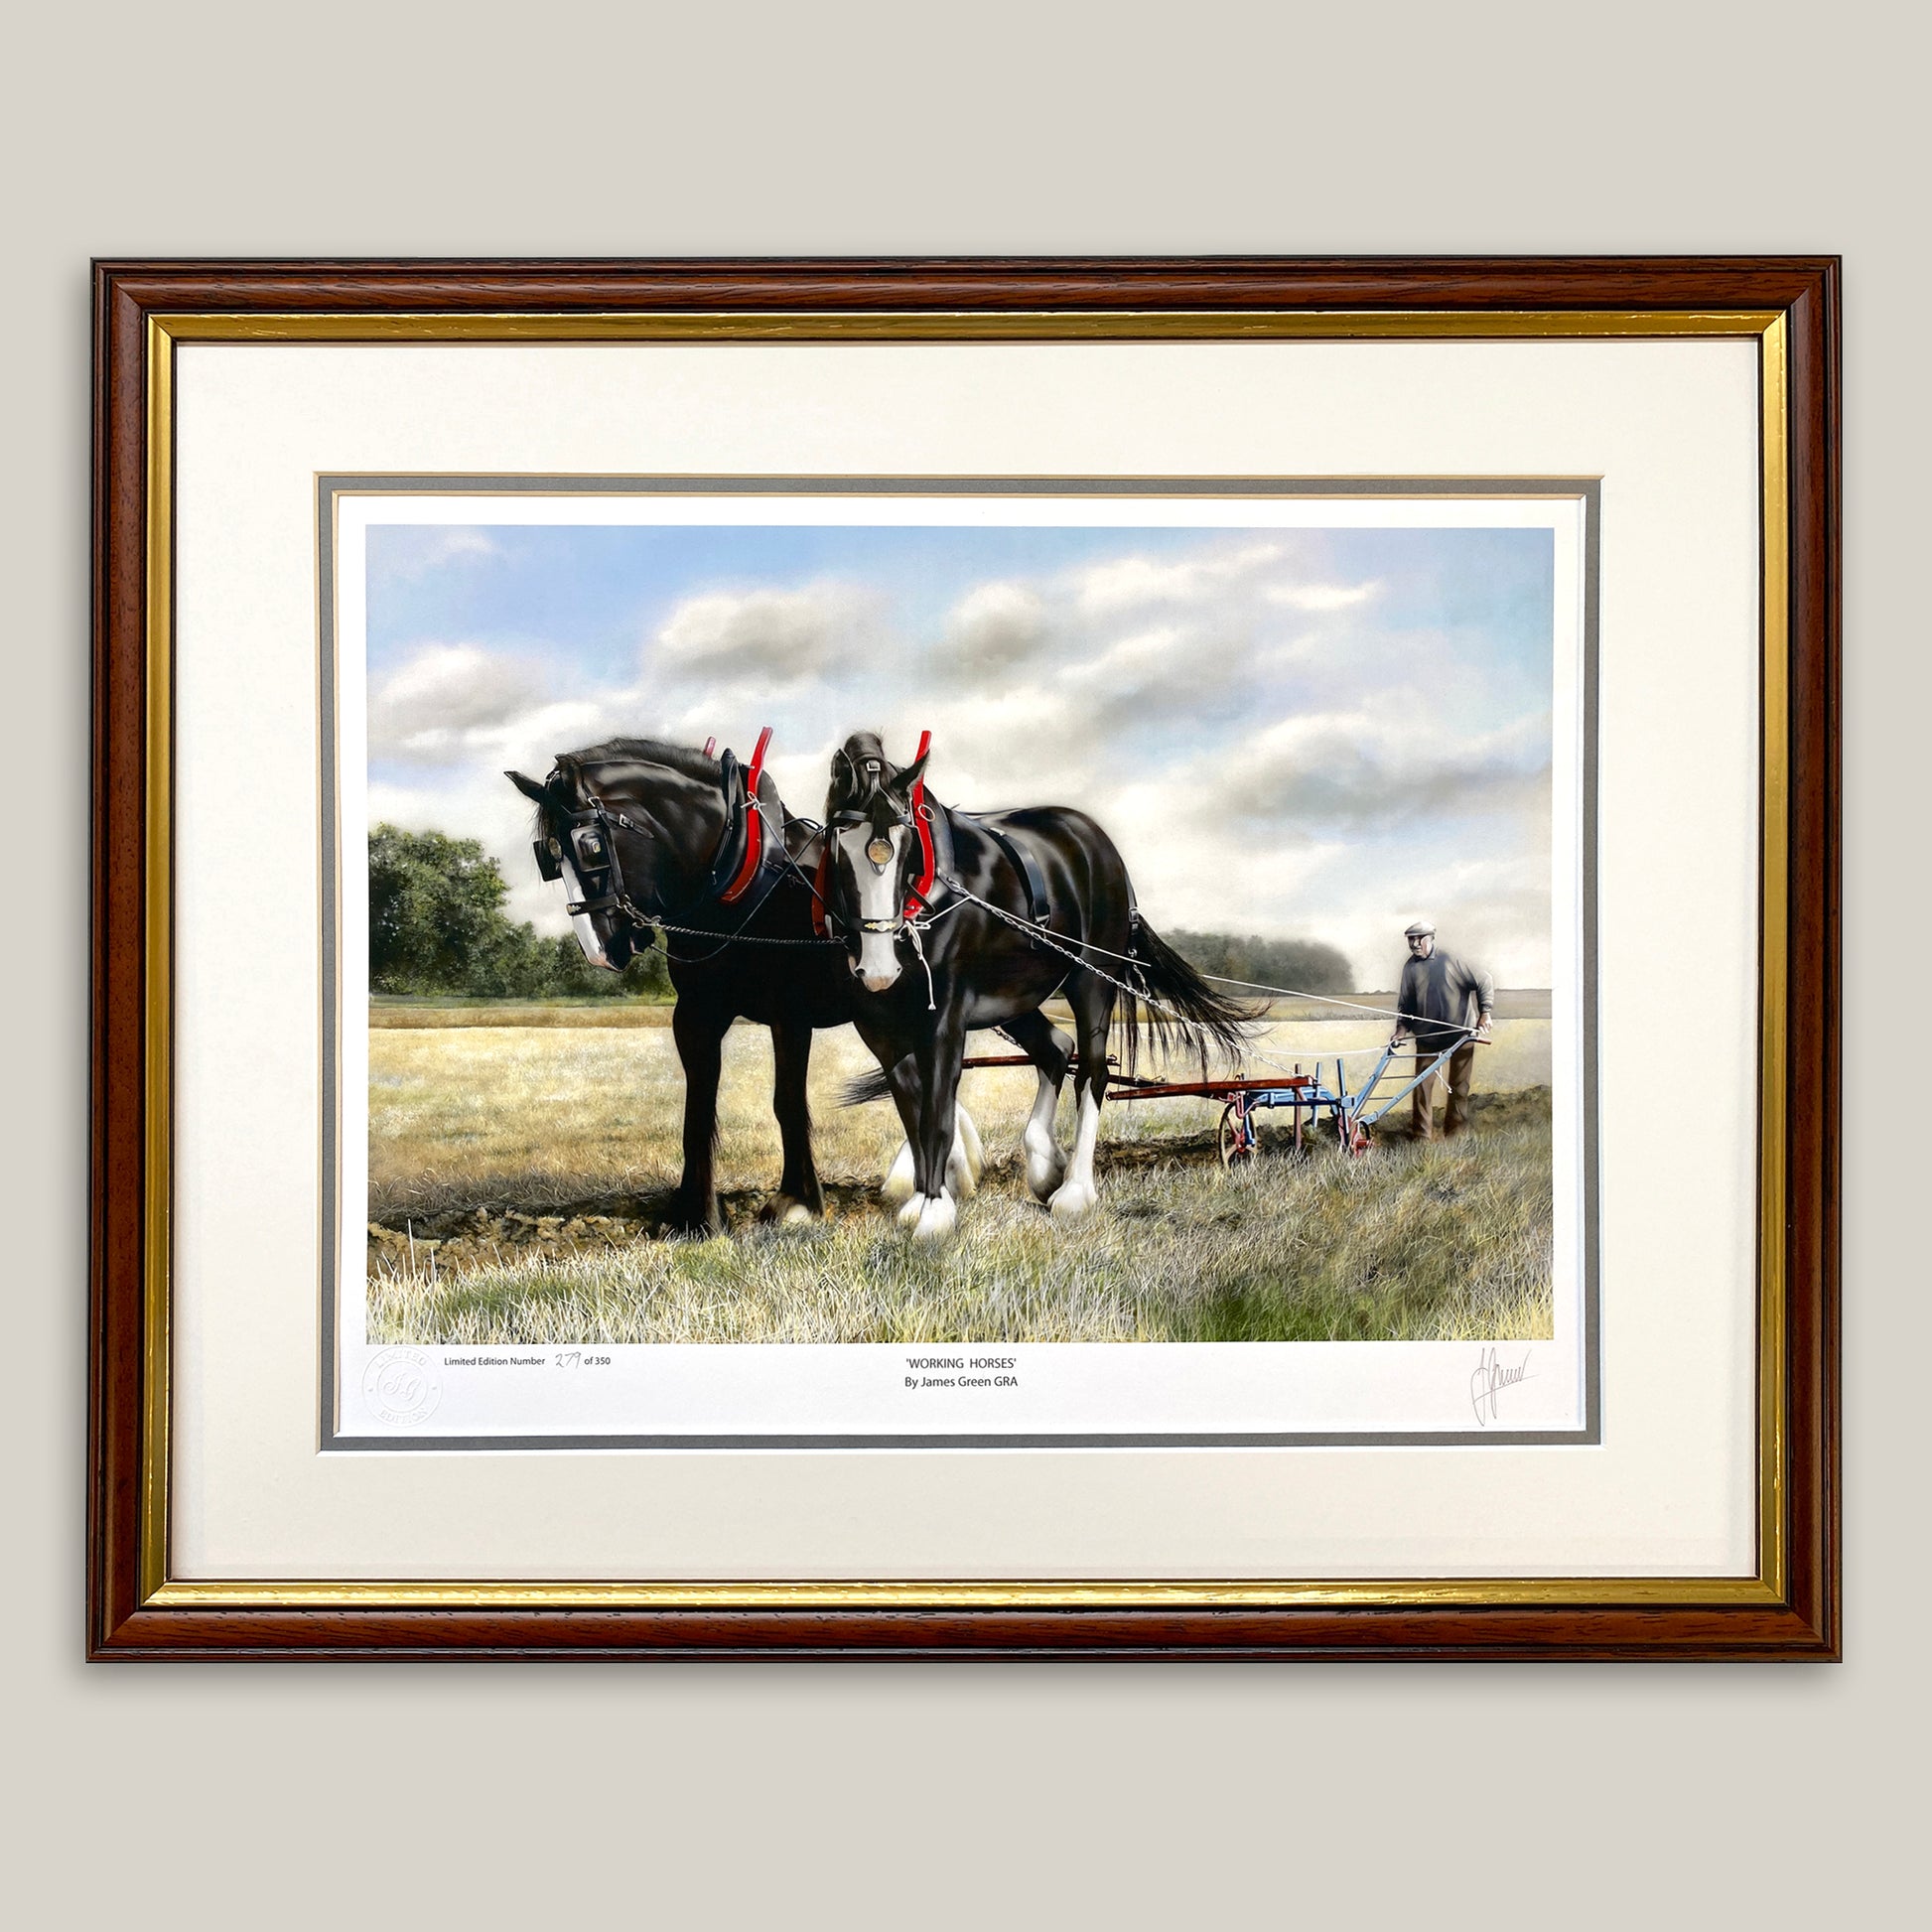 Working horses painting framed in dark wood